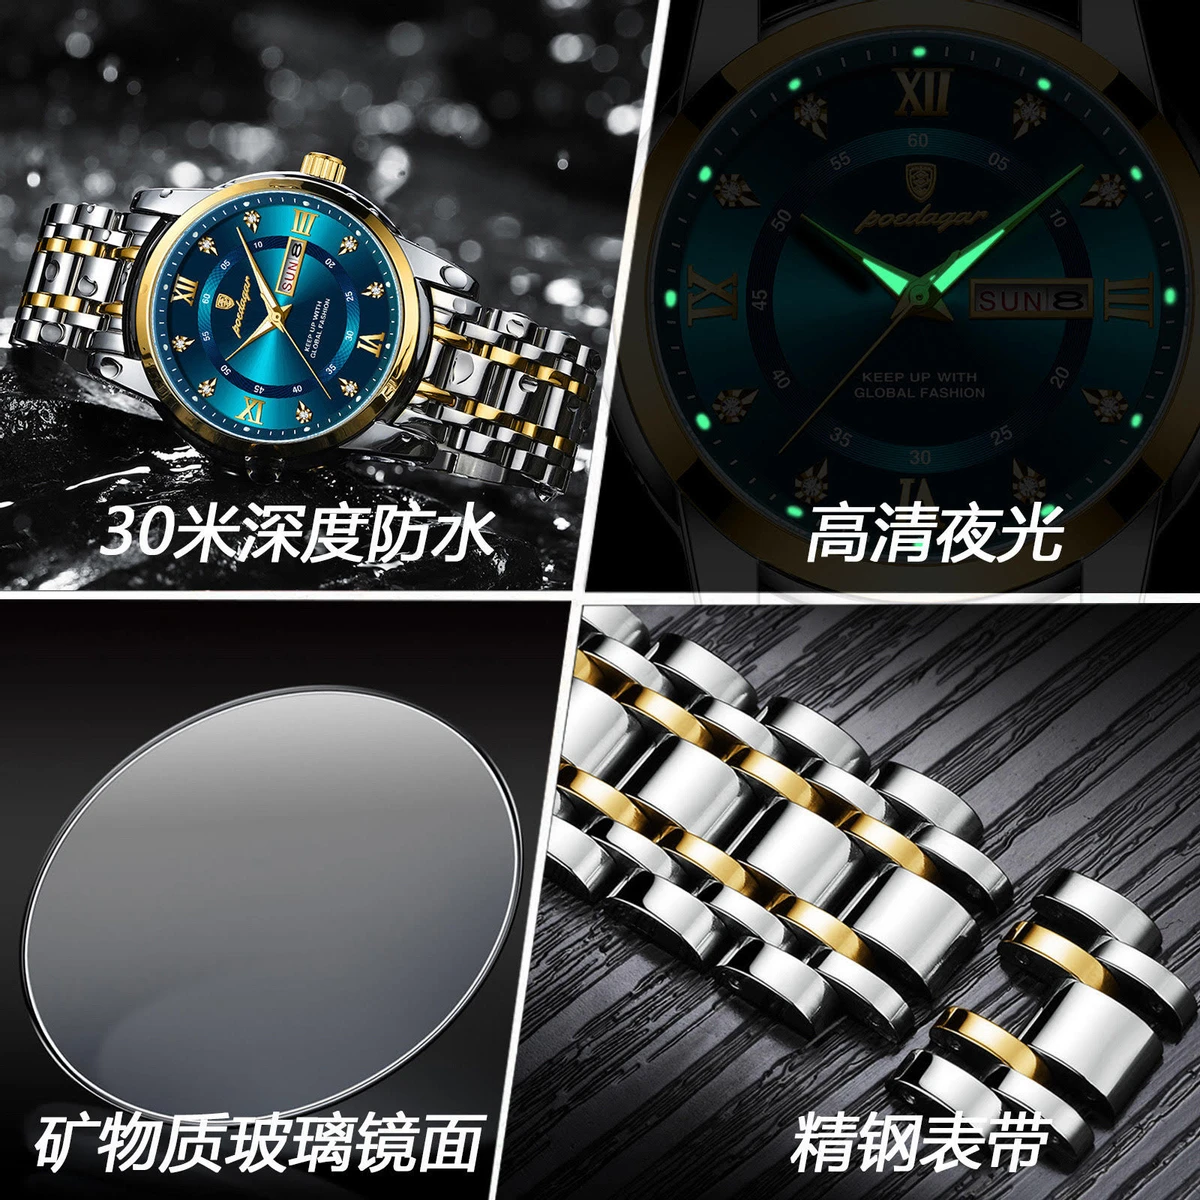 POEDAGAR Luxury Watch for Man Elegant Date Week Waterproof Luminous Men Watch Quartz Stainless Steel Sports Men's Watches- Black & silver